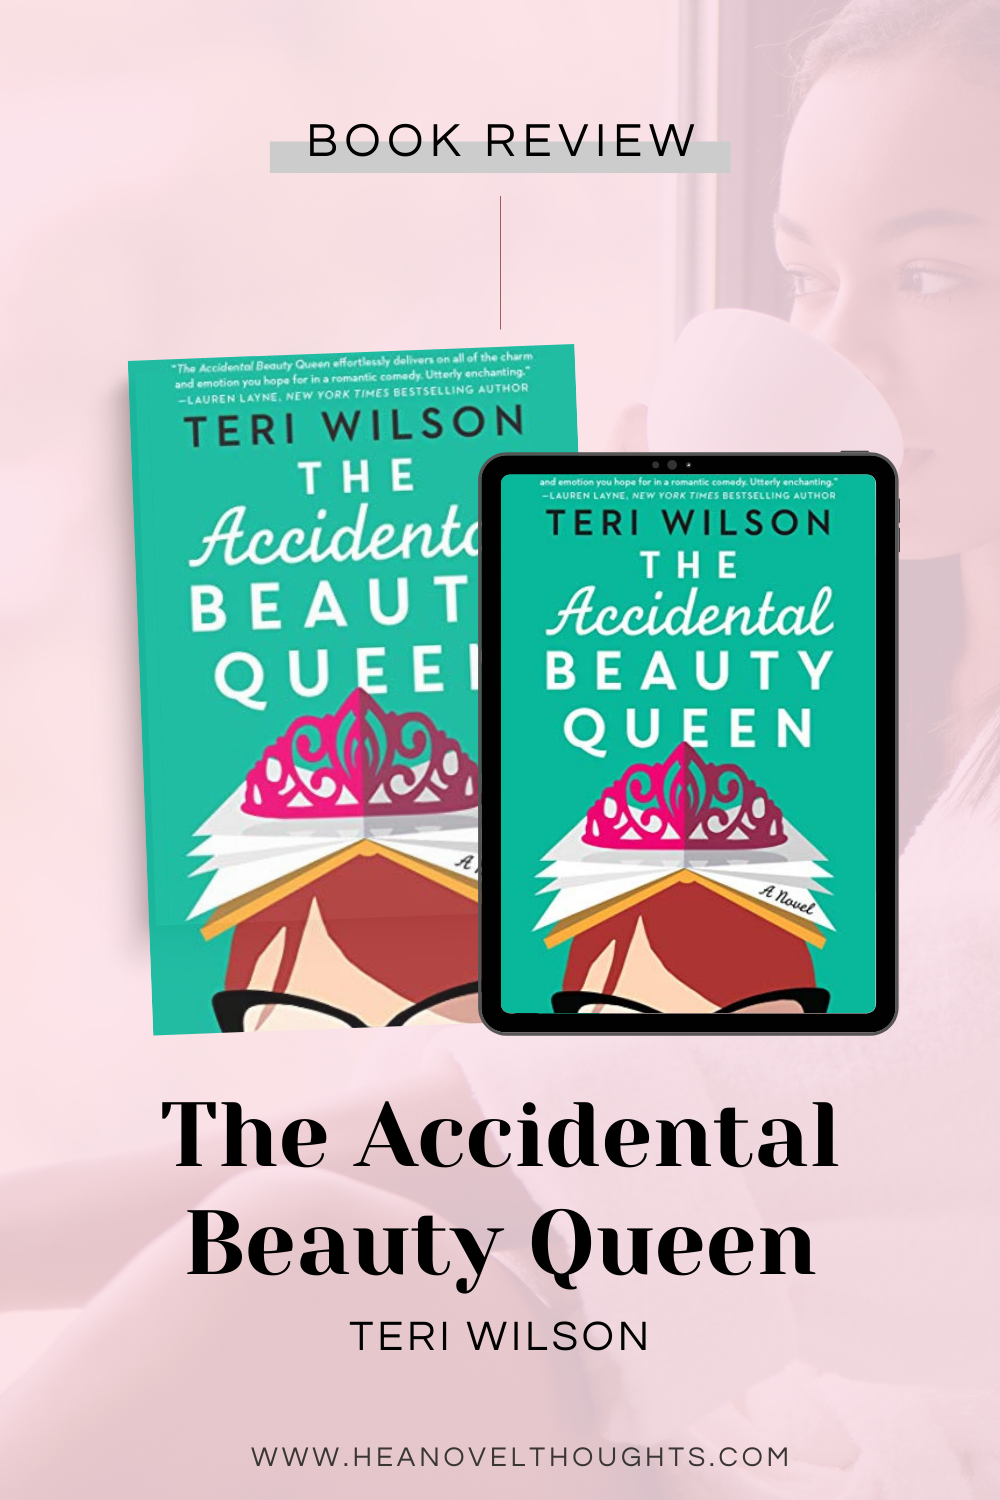 Accidental Beauty Queen by Teri Wilson